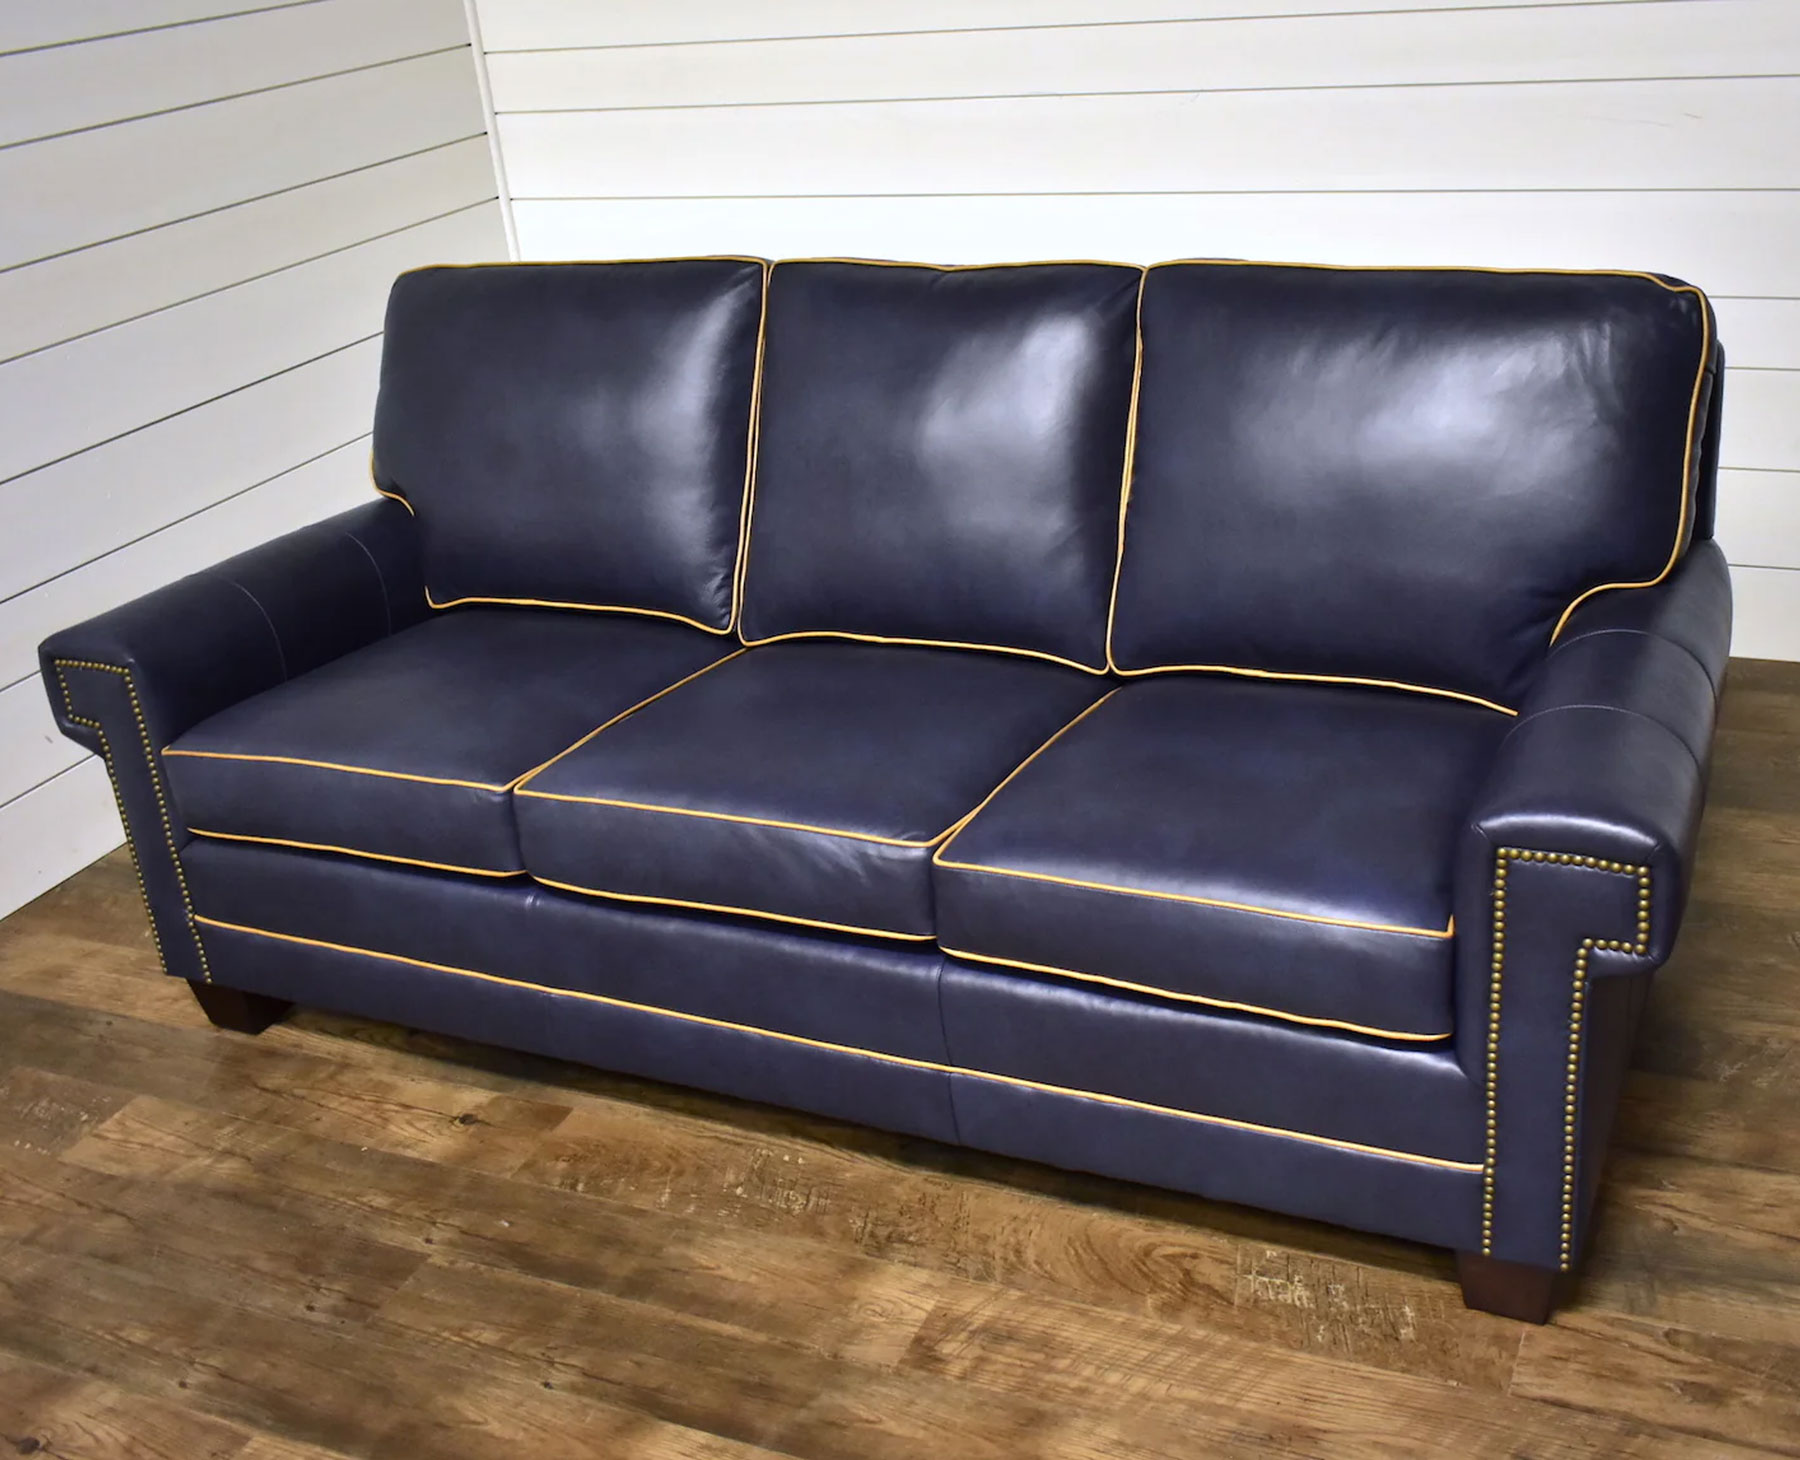 McKinley Leather 4254 Keystone Sofa in Derby Admiral Leather